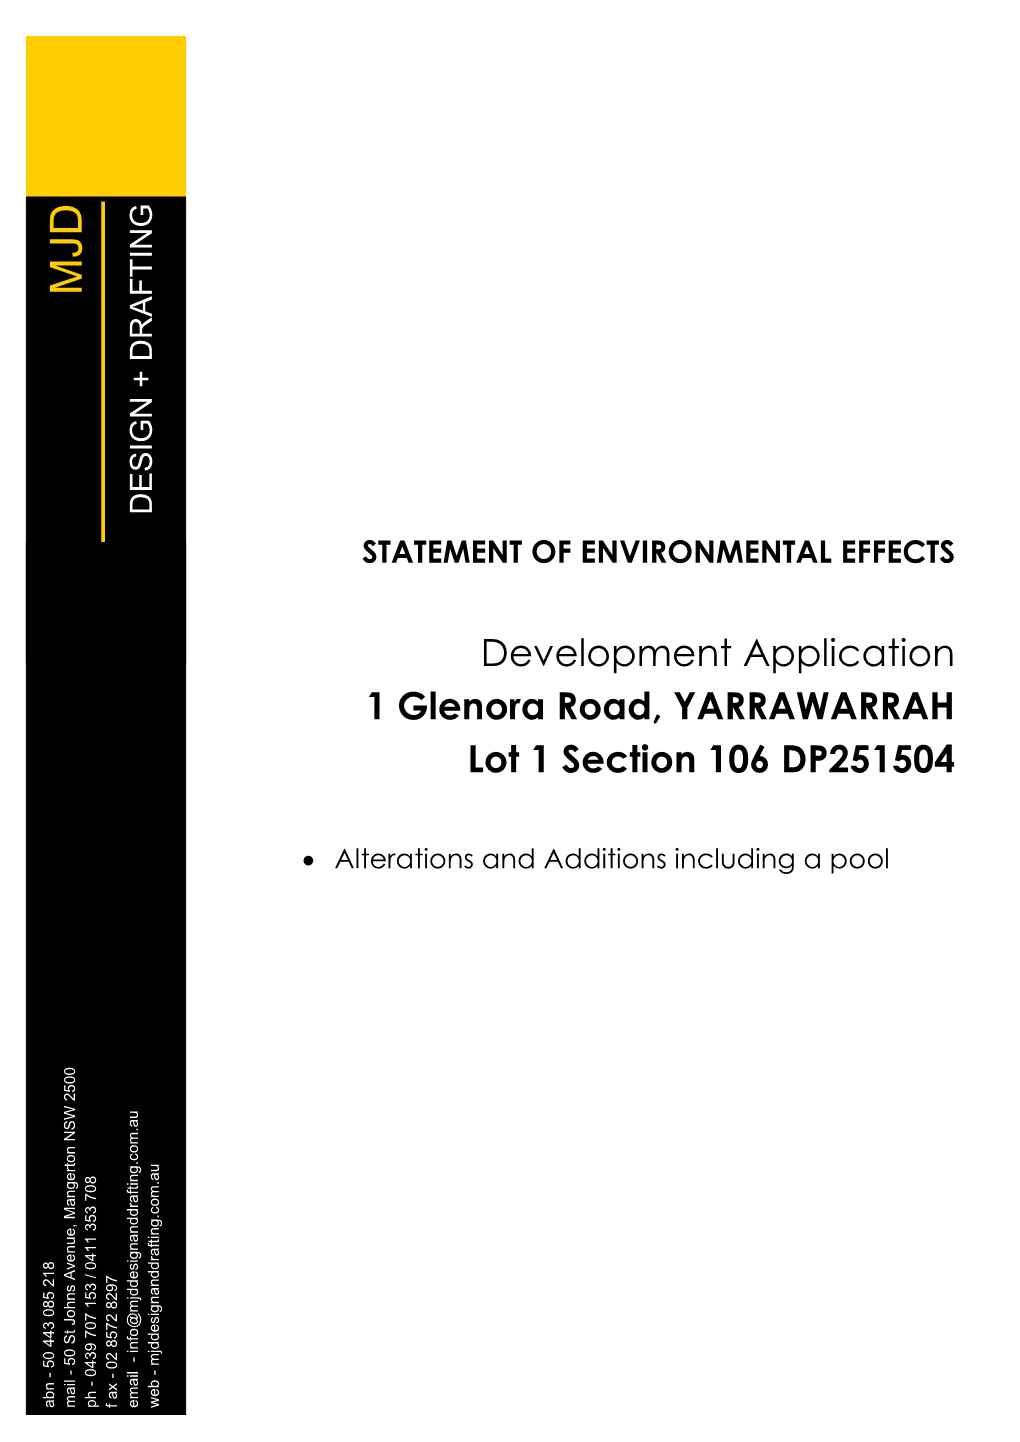 Development Application 1 Glenora Road, YARRAWARRAH Lot 1 Section 106 DP251504